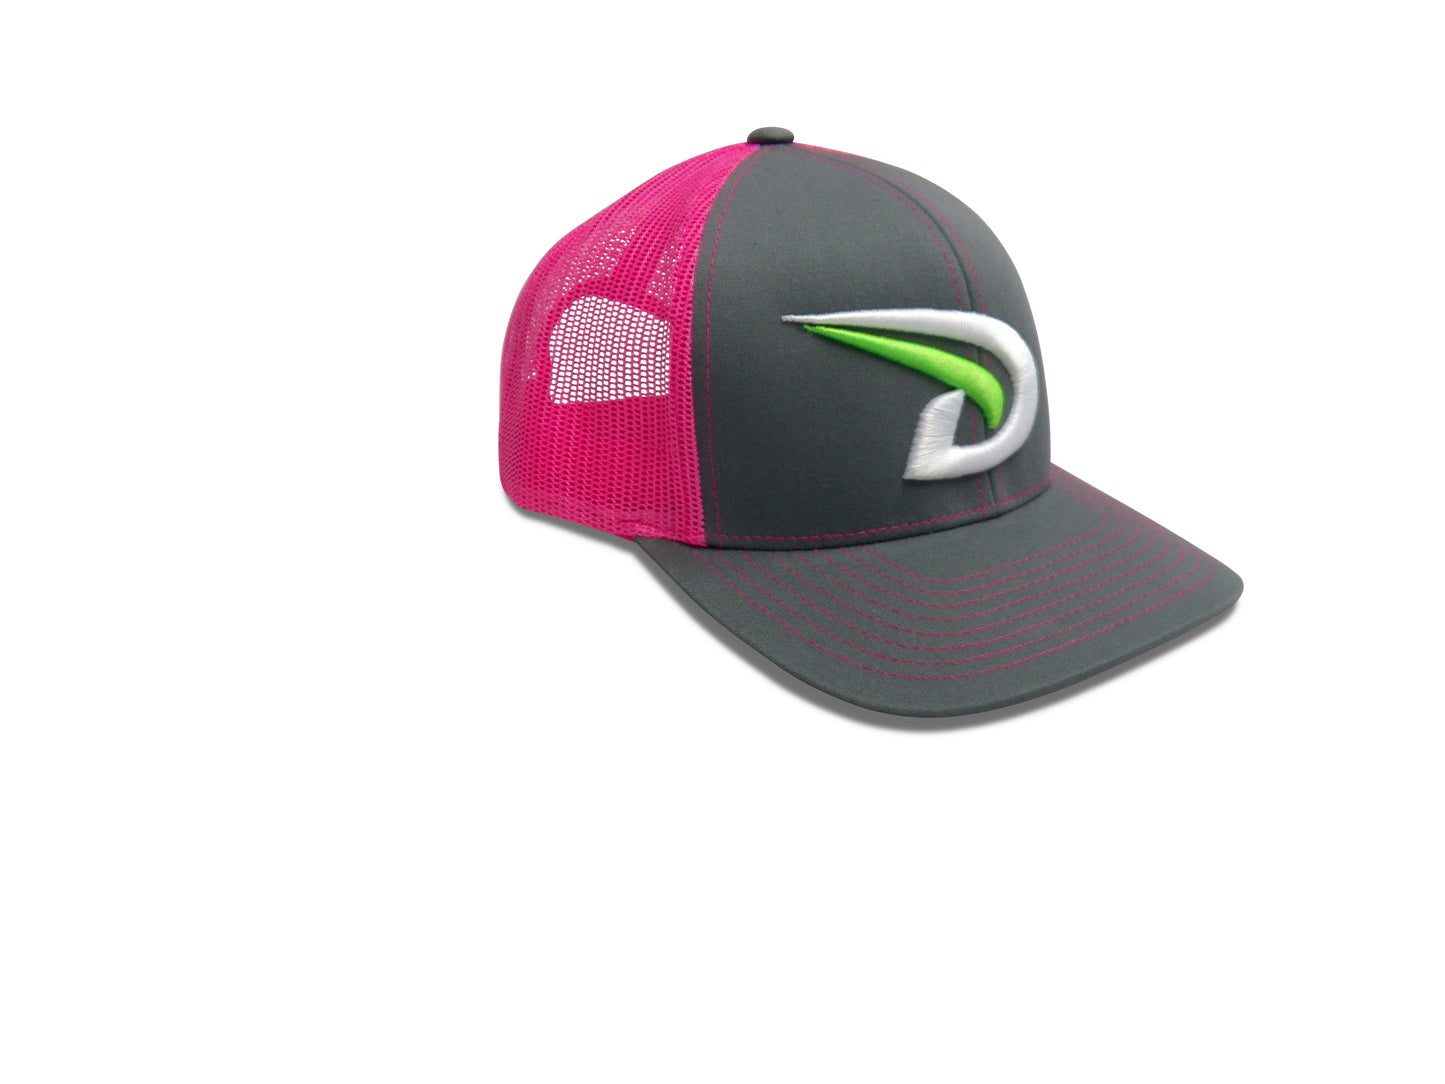 Dux Sports Trucker Snapback Hat Pink - Adjustable backstrap